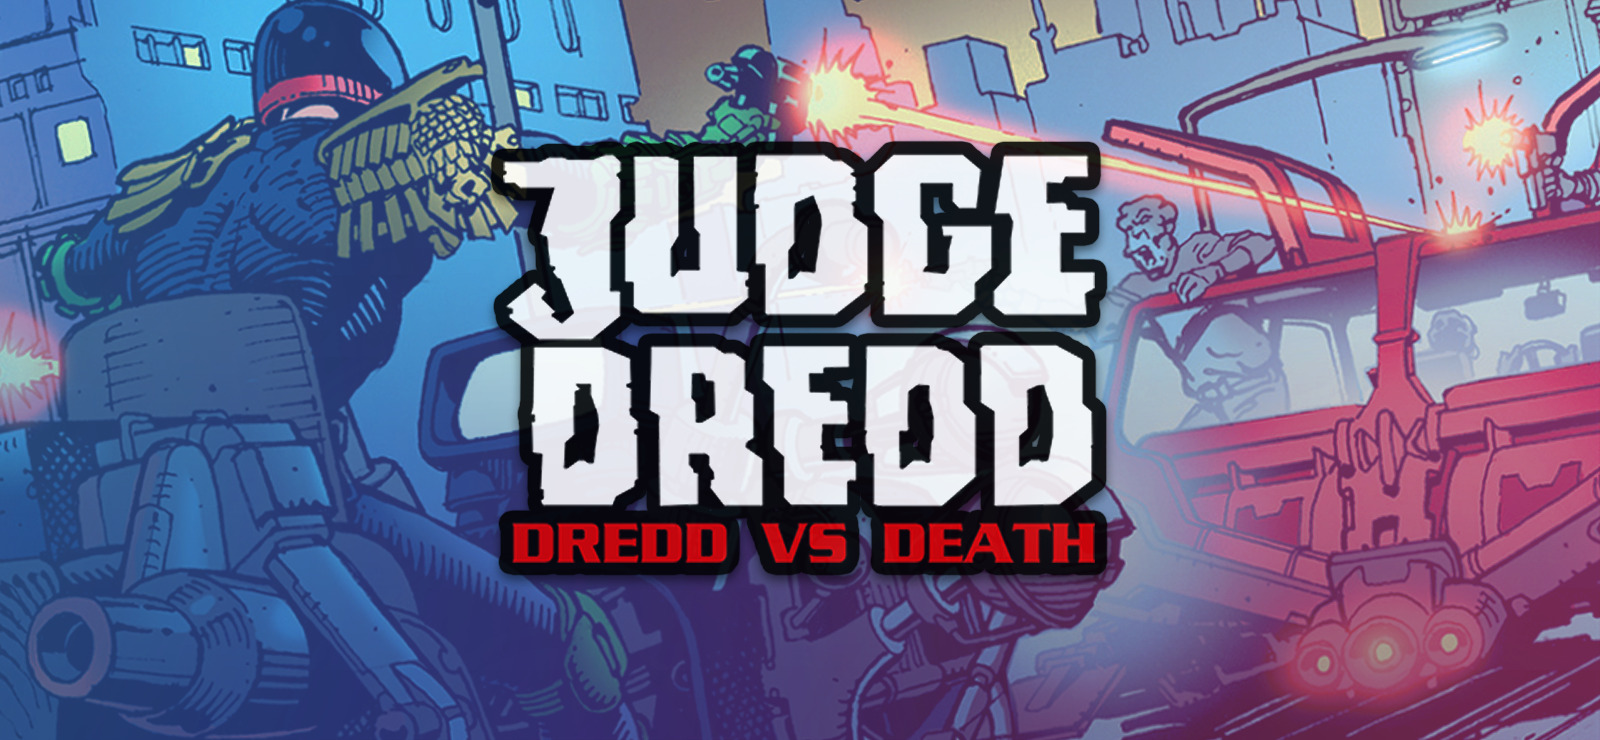 download judge dredds